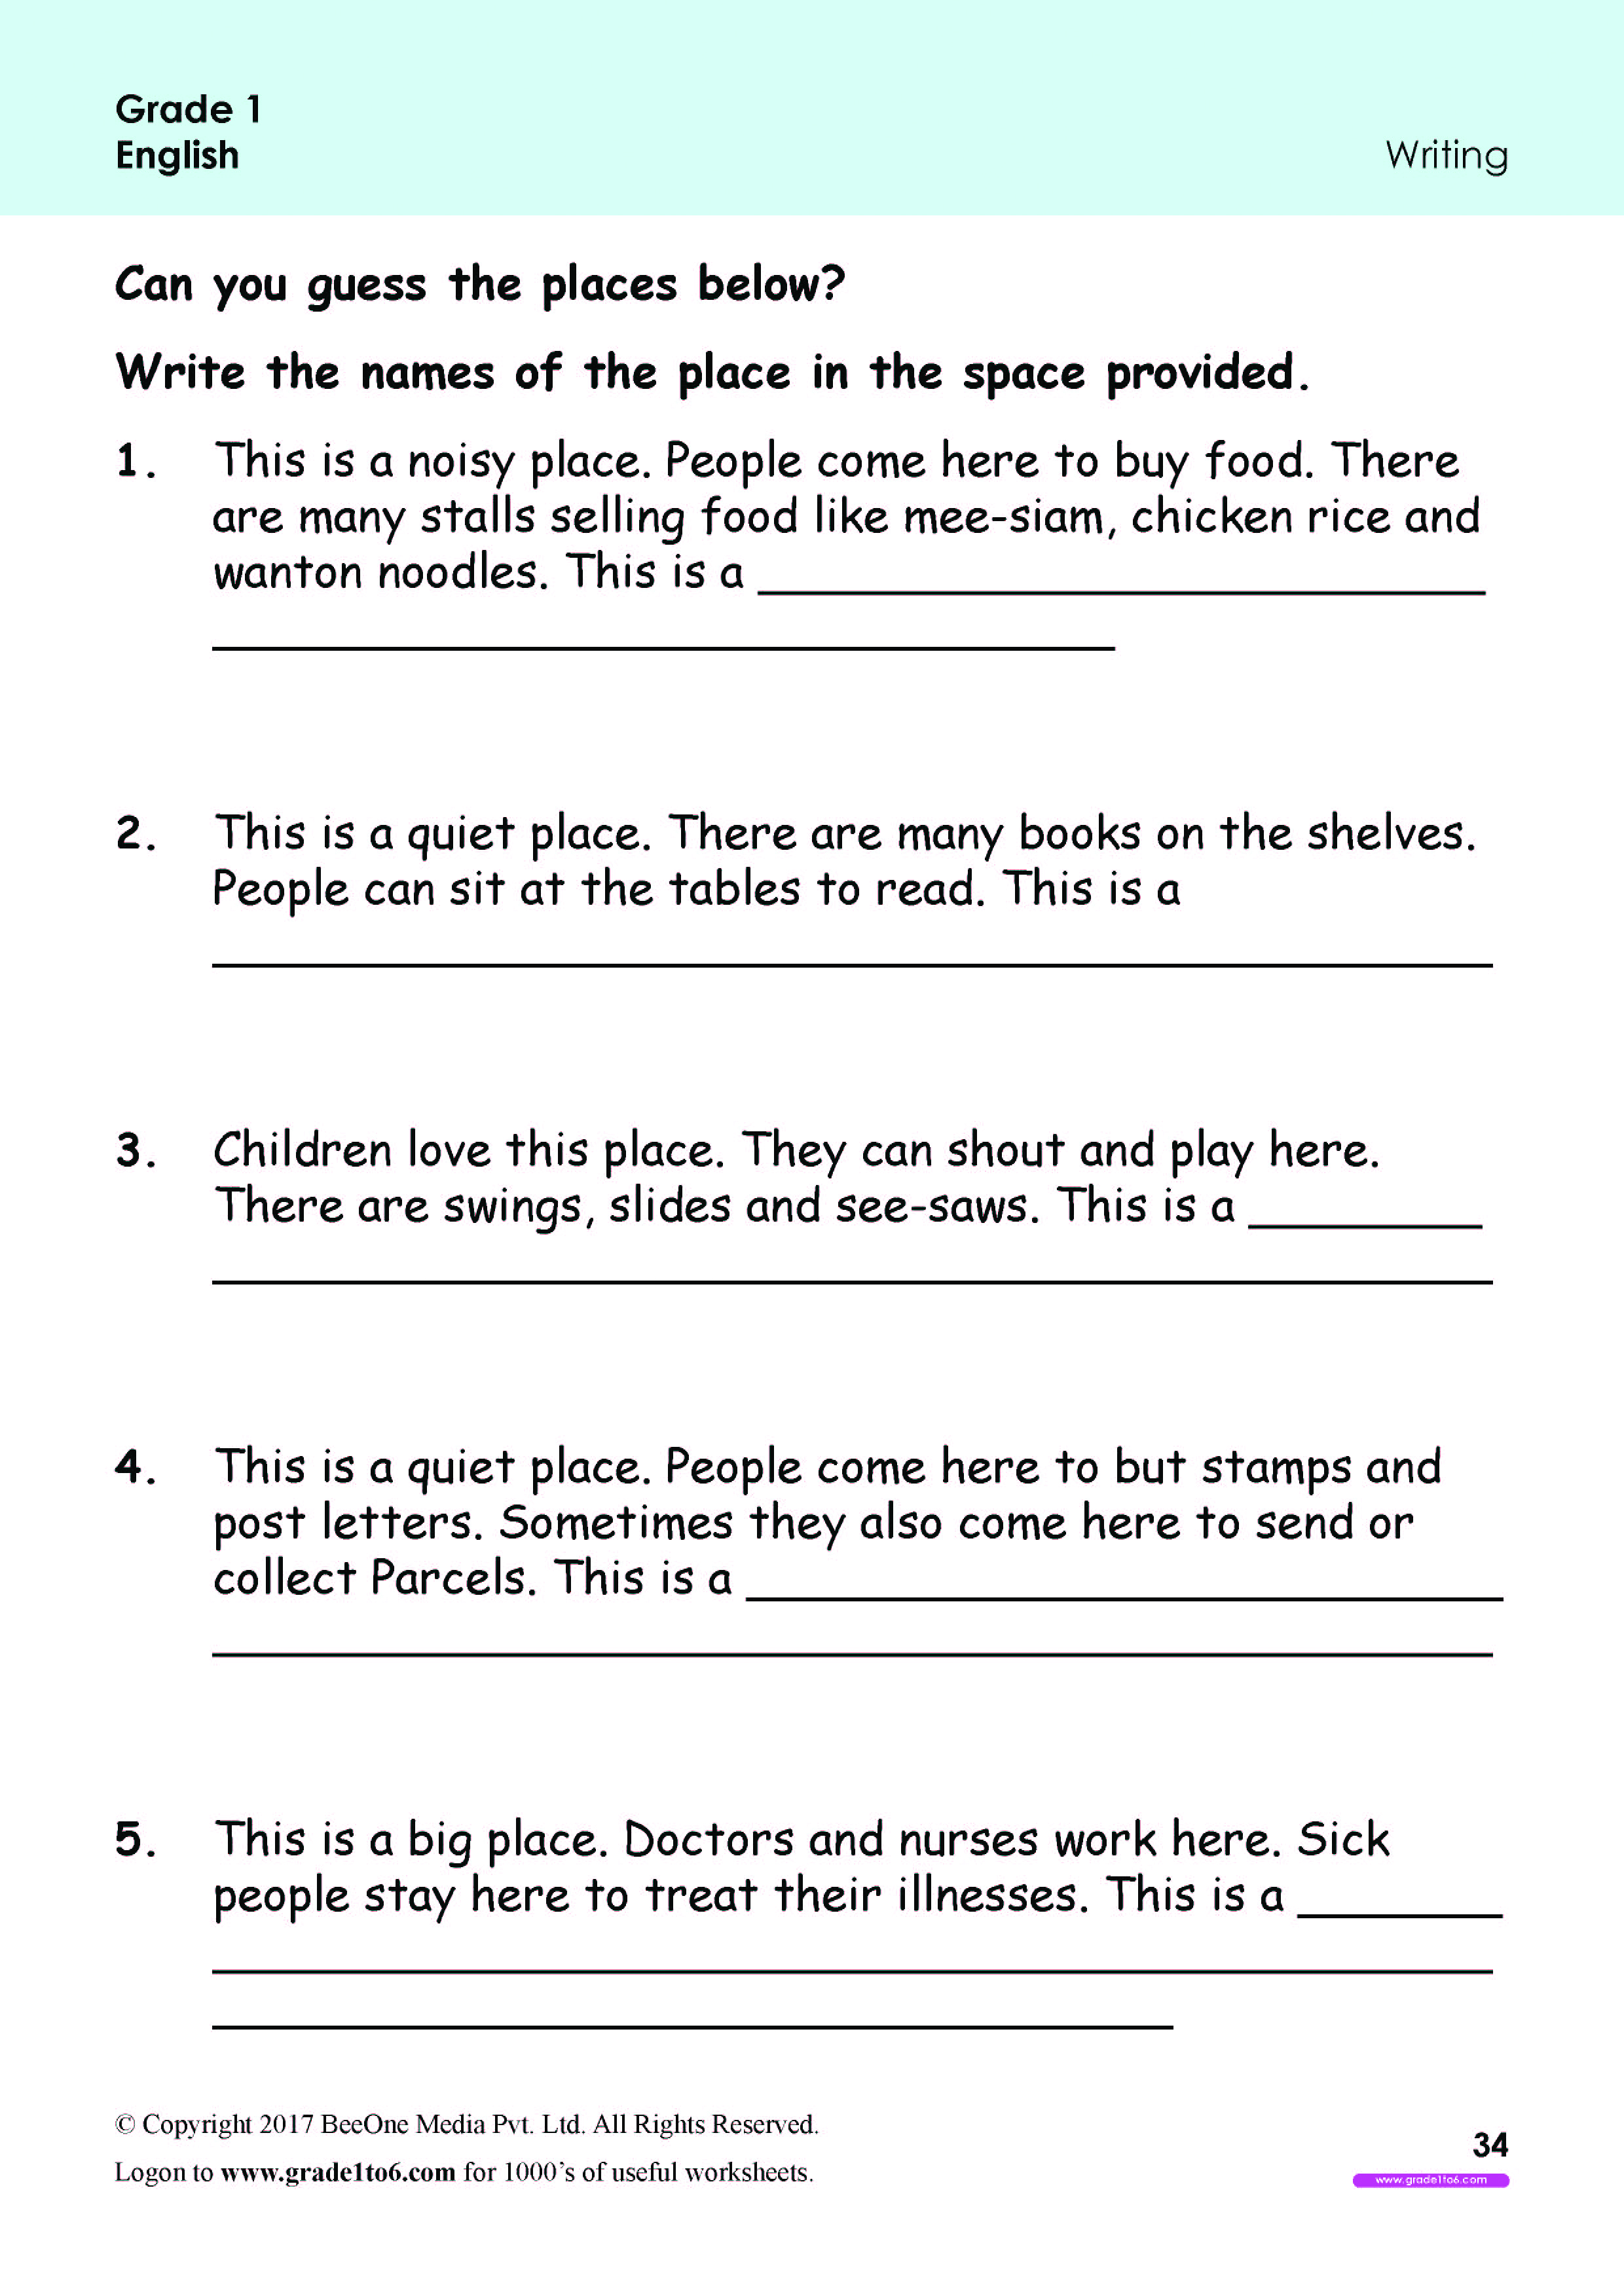 english literacy understanding worksheets www grade1to6 com